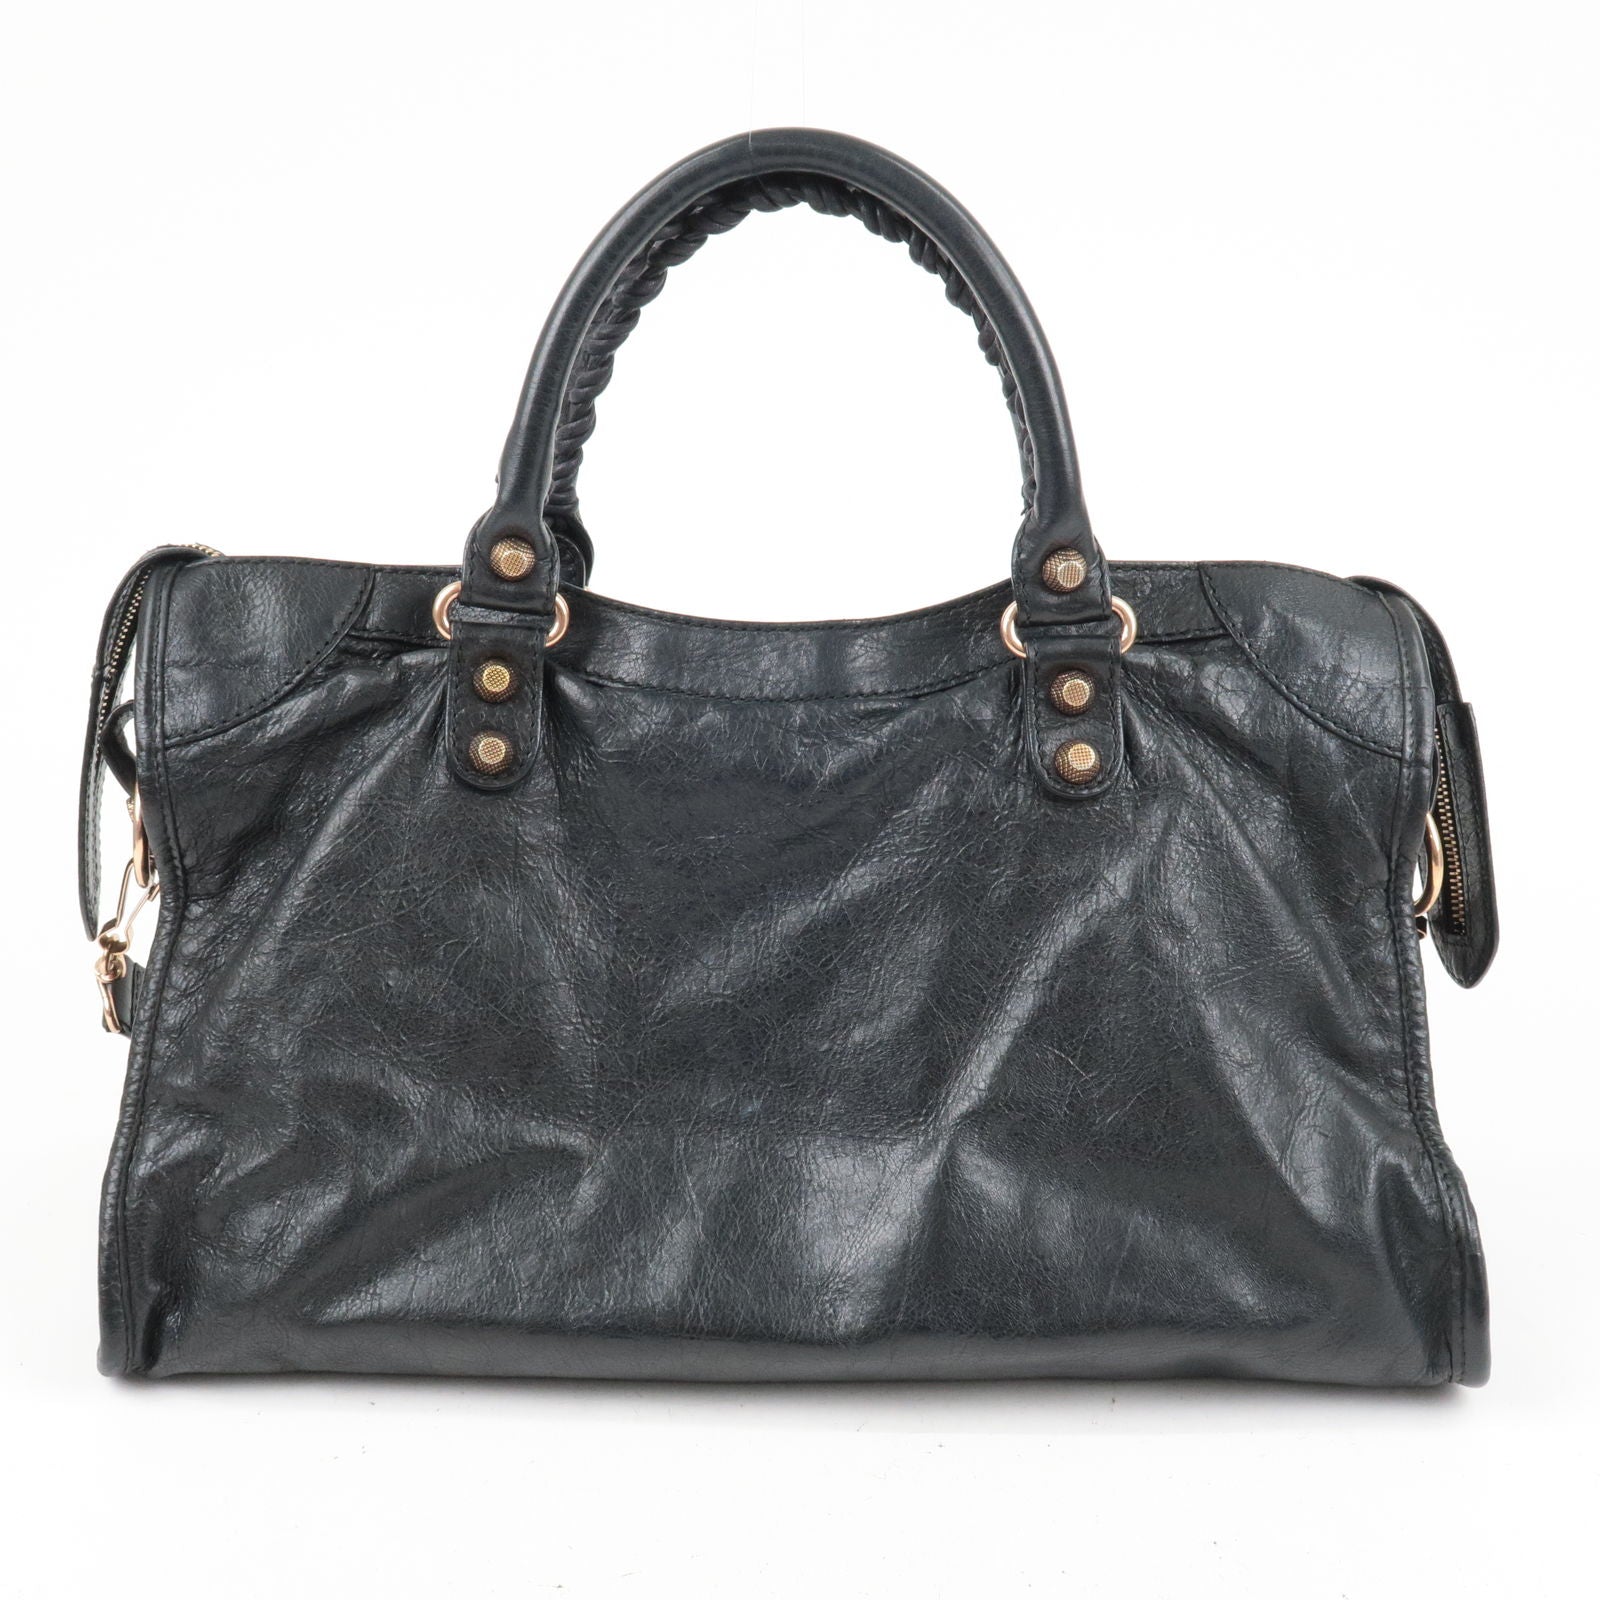 Balenciaga Classic Suede City Bag in Black